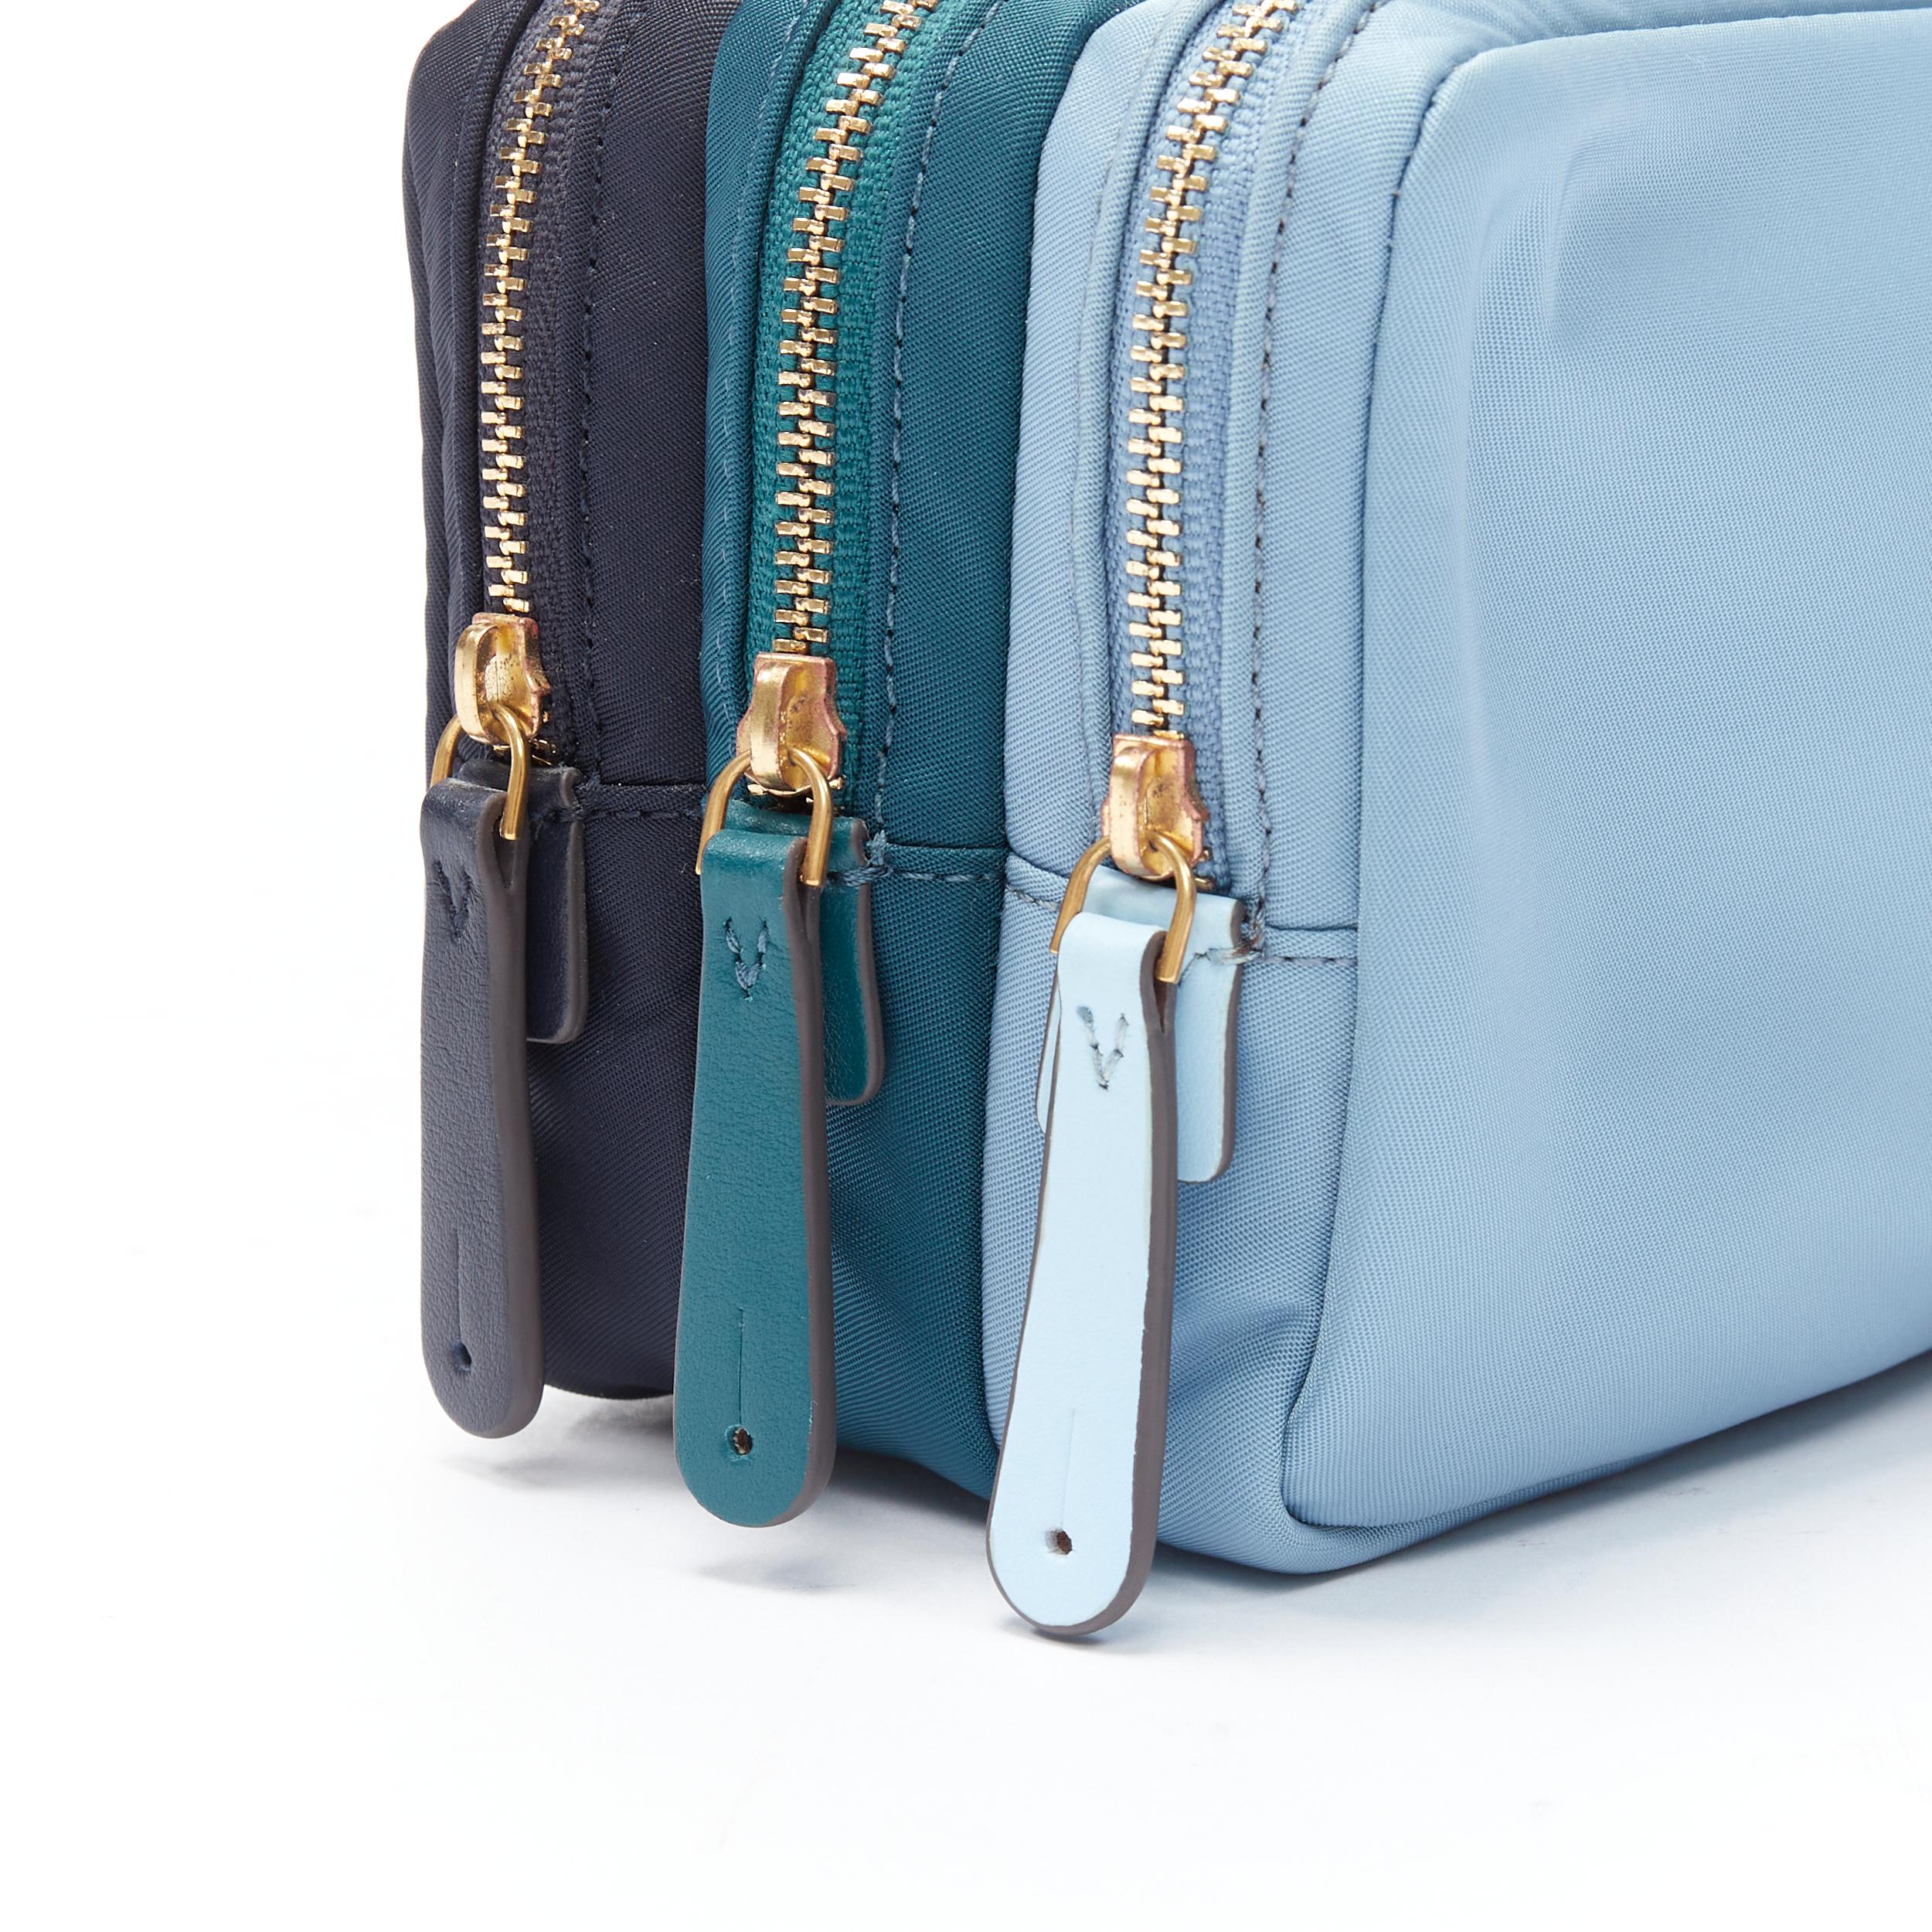 Women's ANYA HINDMARCH Triple Zip blue teal navy nylon make up pouch bag clutch